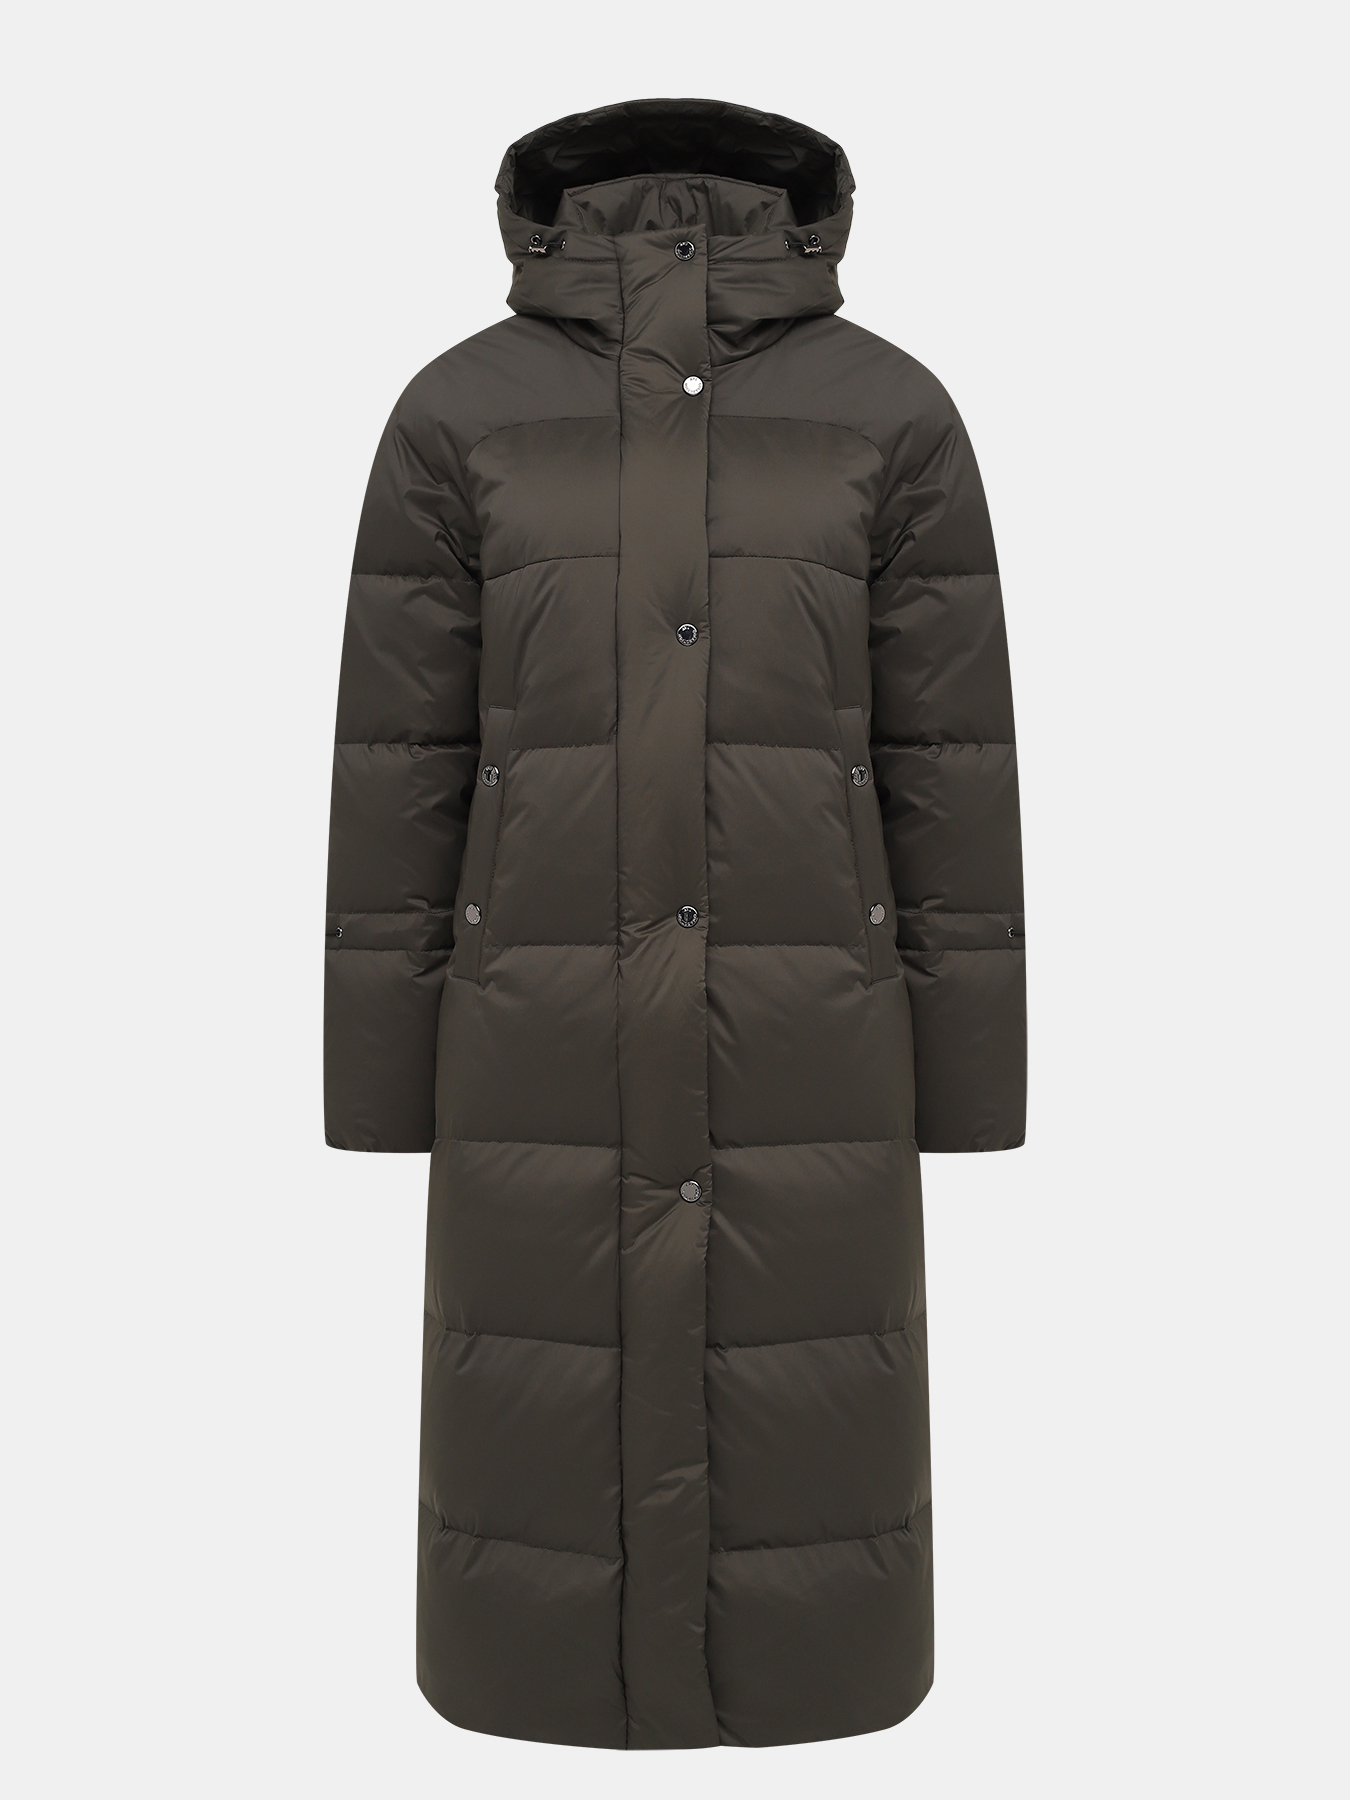 Пальто зимнее AVI 433638-026, цвет хаки, размер 50 - фото 1